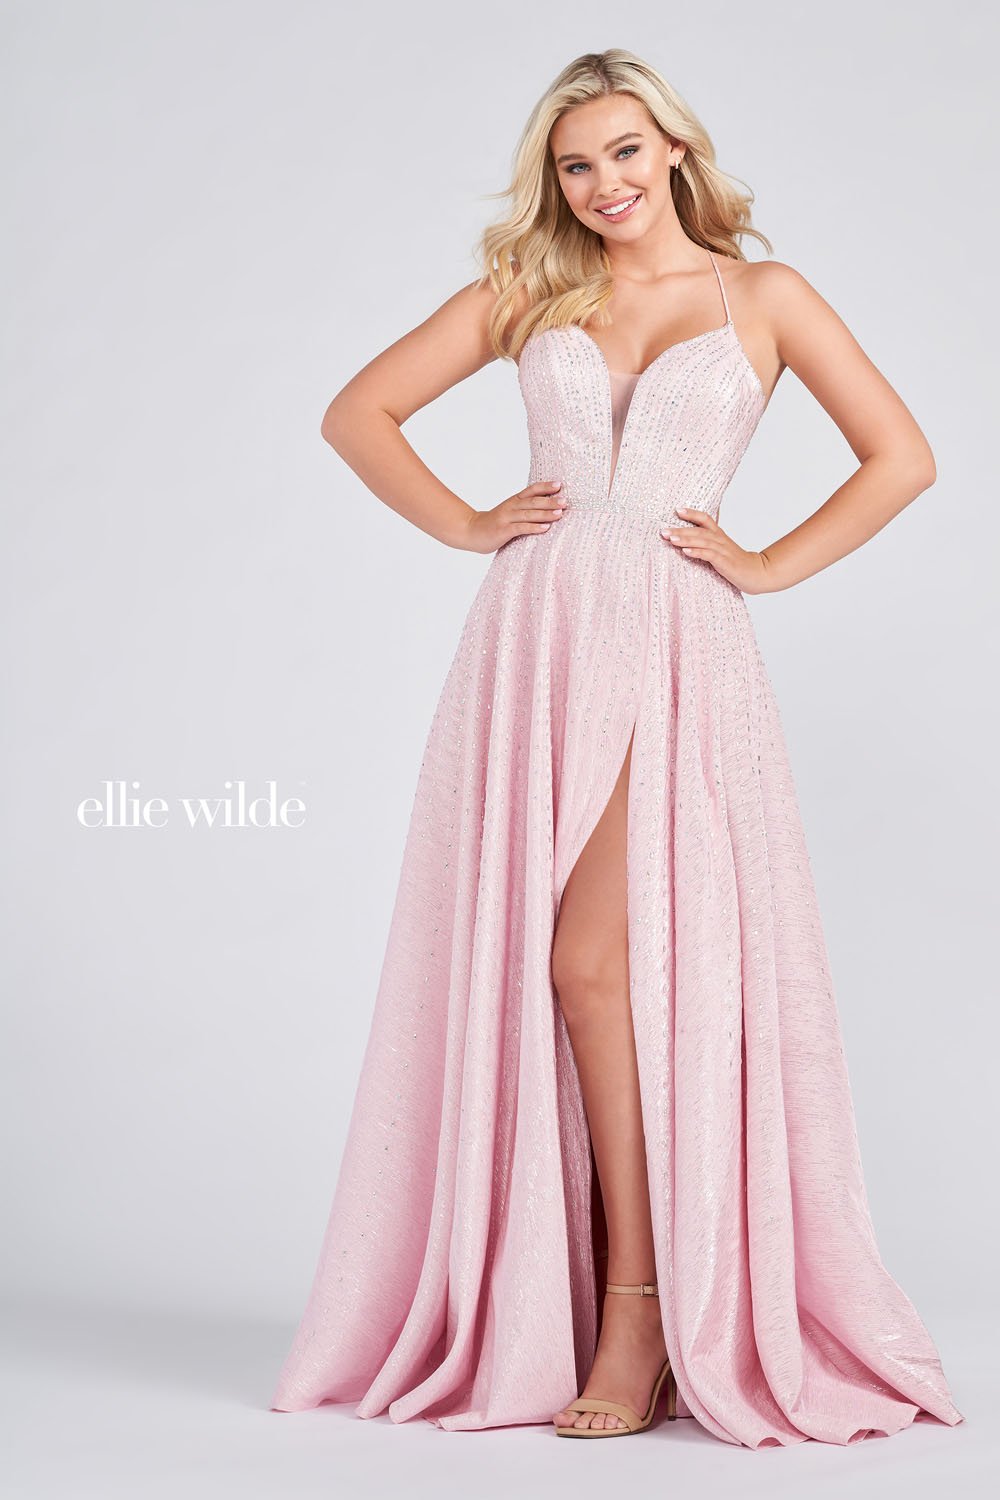 Ellie Wilde Pink EW122082 Prom Dress Image.  Pink formal dress.